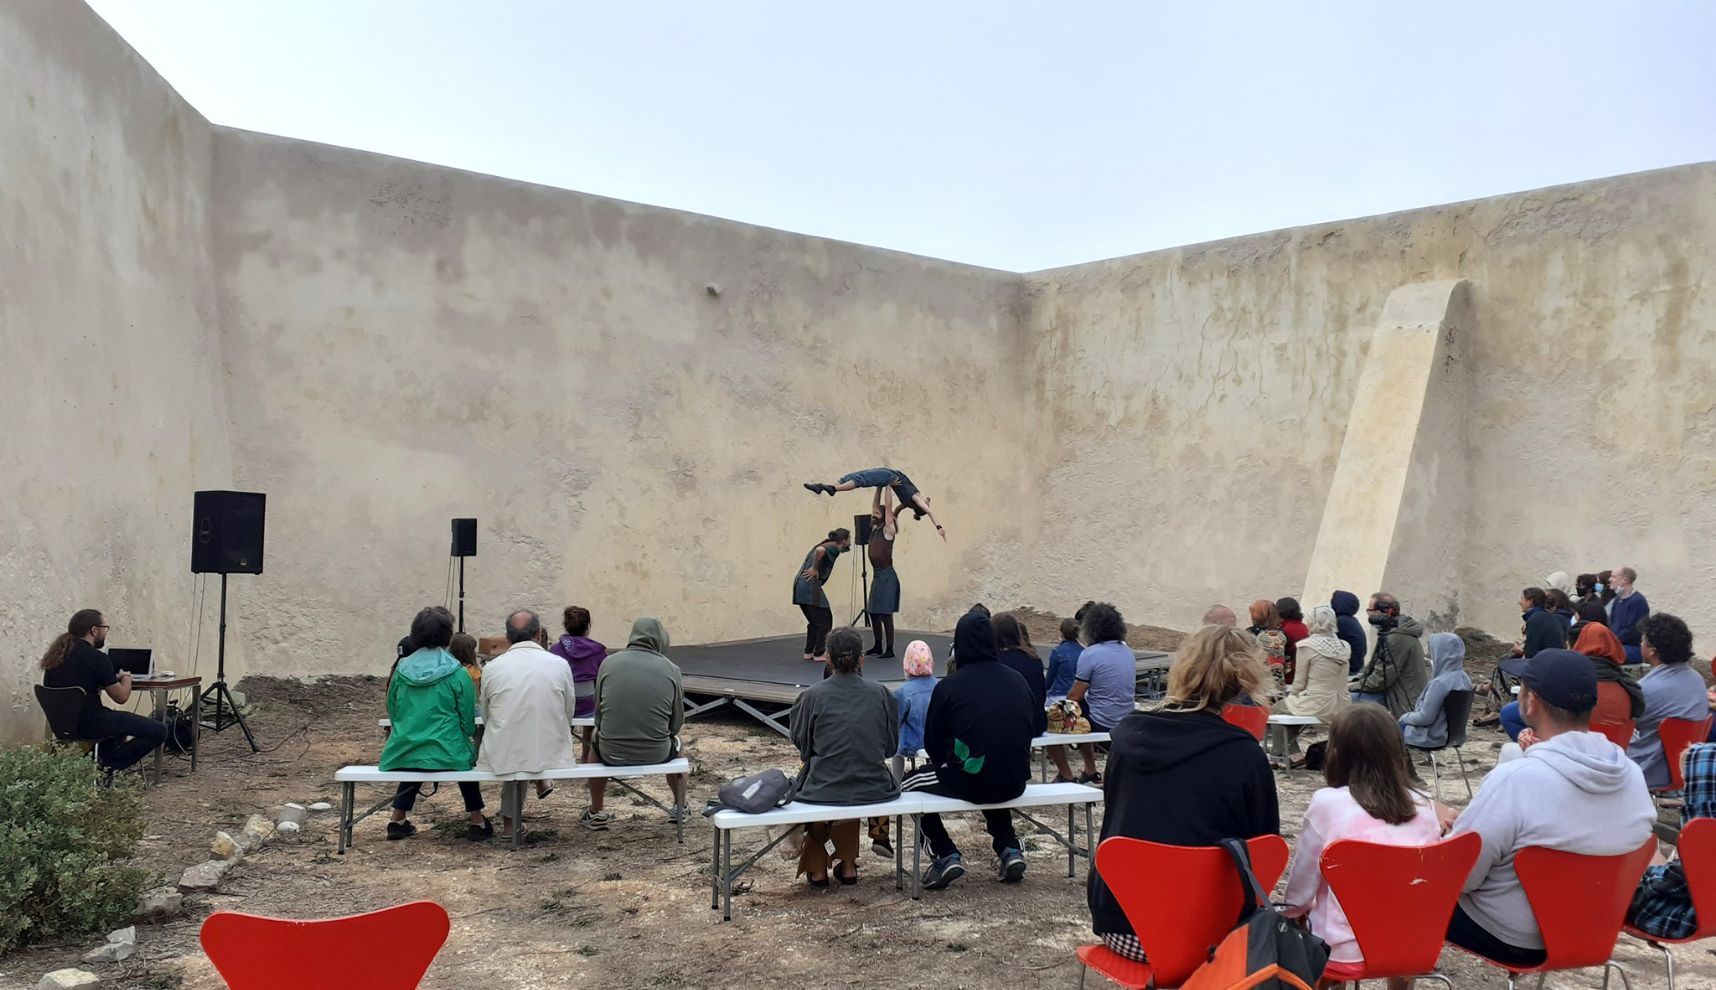 Cia Vaya e Teatro Experimental de Lagos apresentaram BARBELIX na Fortaleza de Sagres